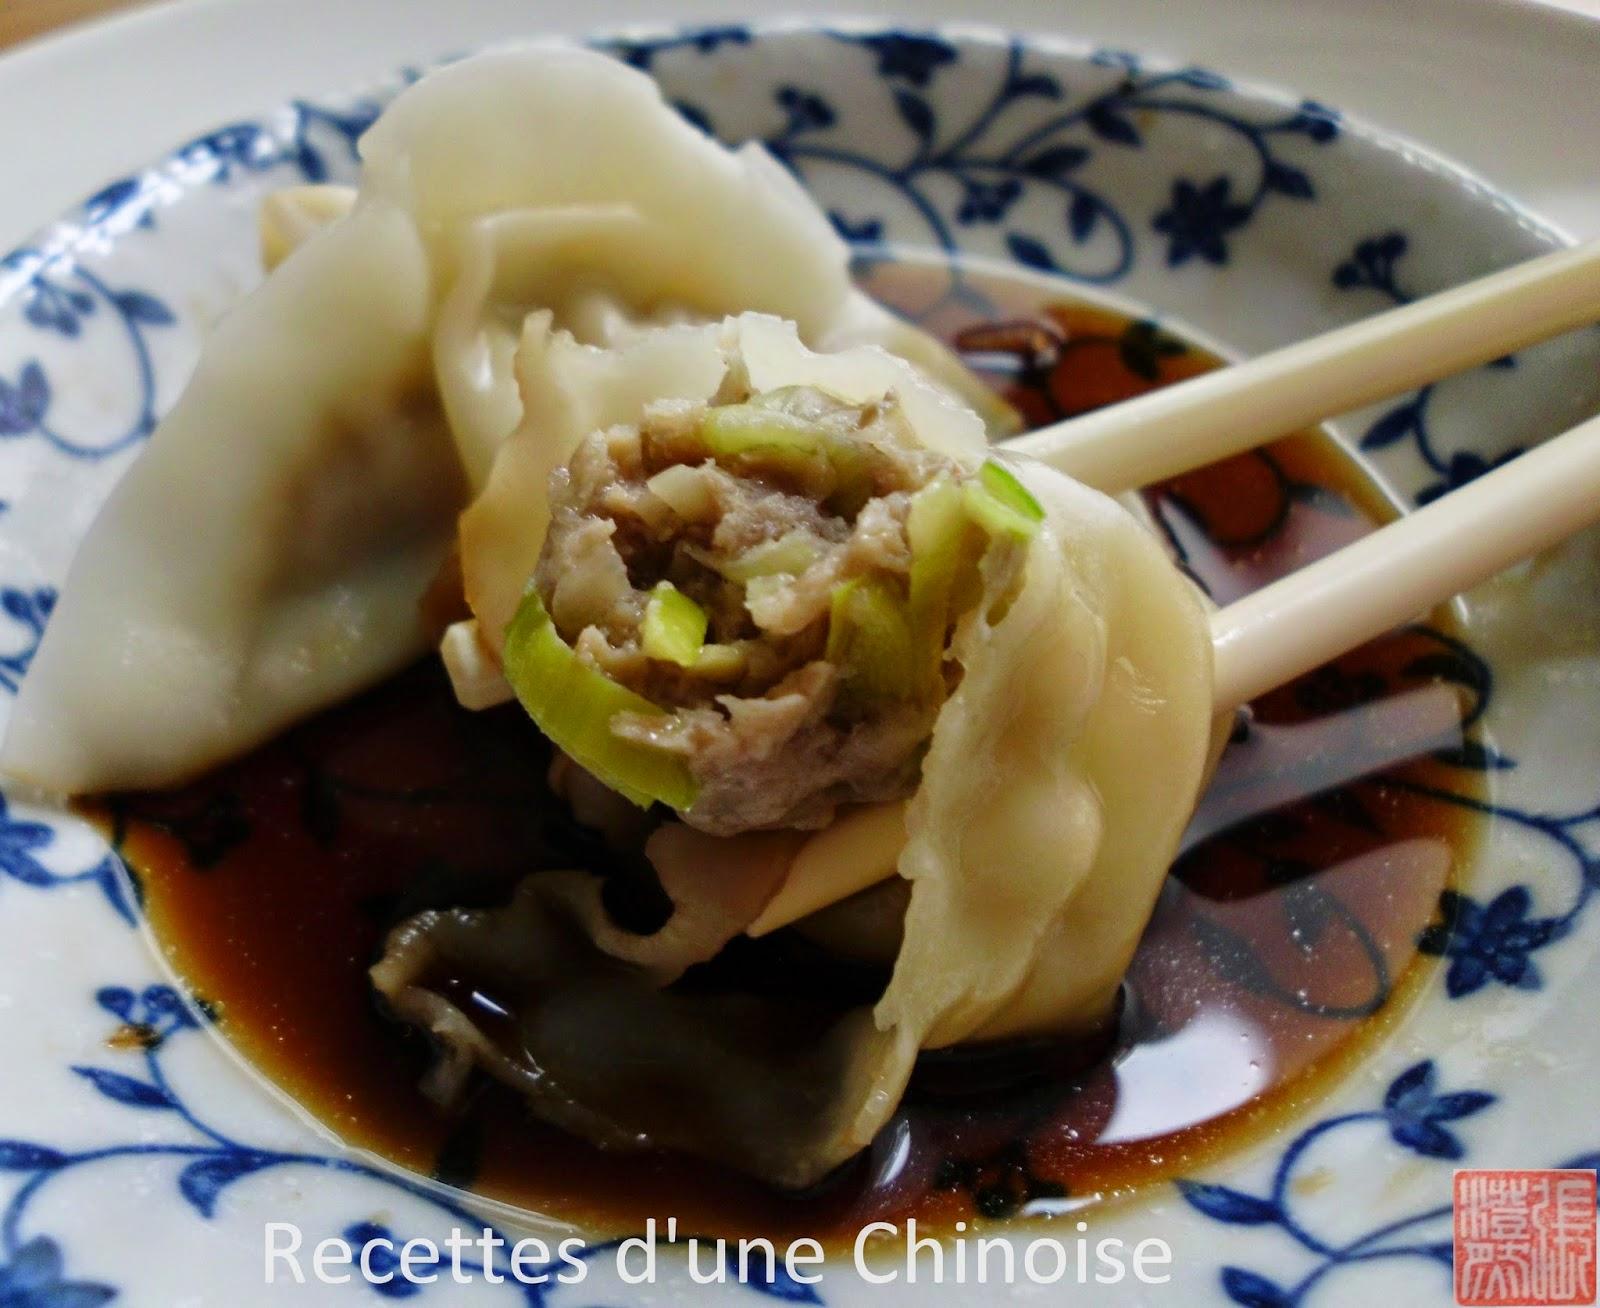 Raviolis au porc et poireau 猪肉大葱水饺 zhūròu dàcōng shuǐjiǎo